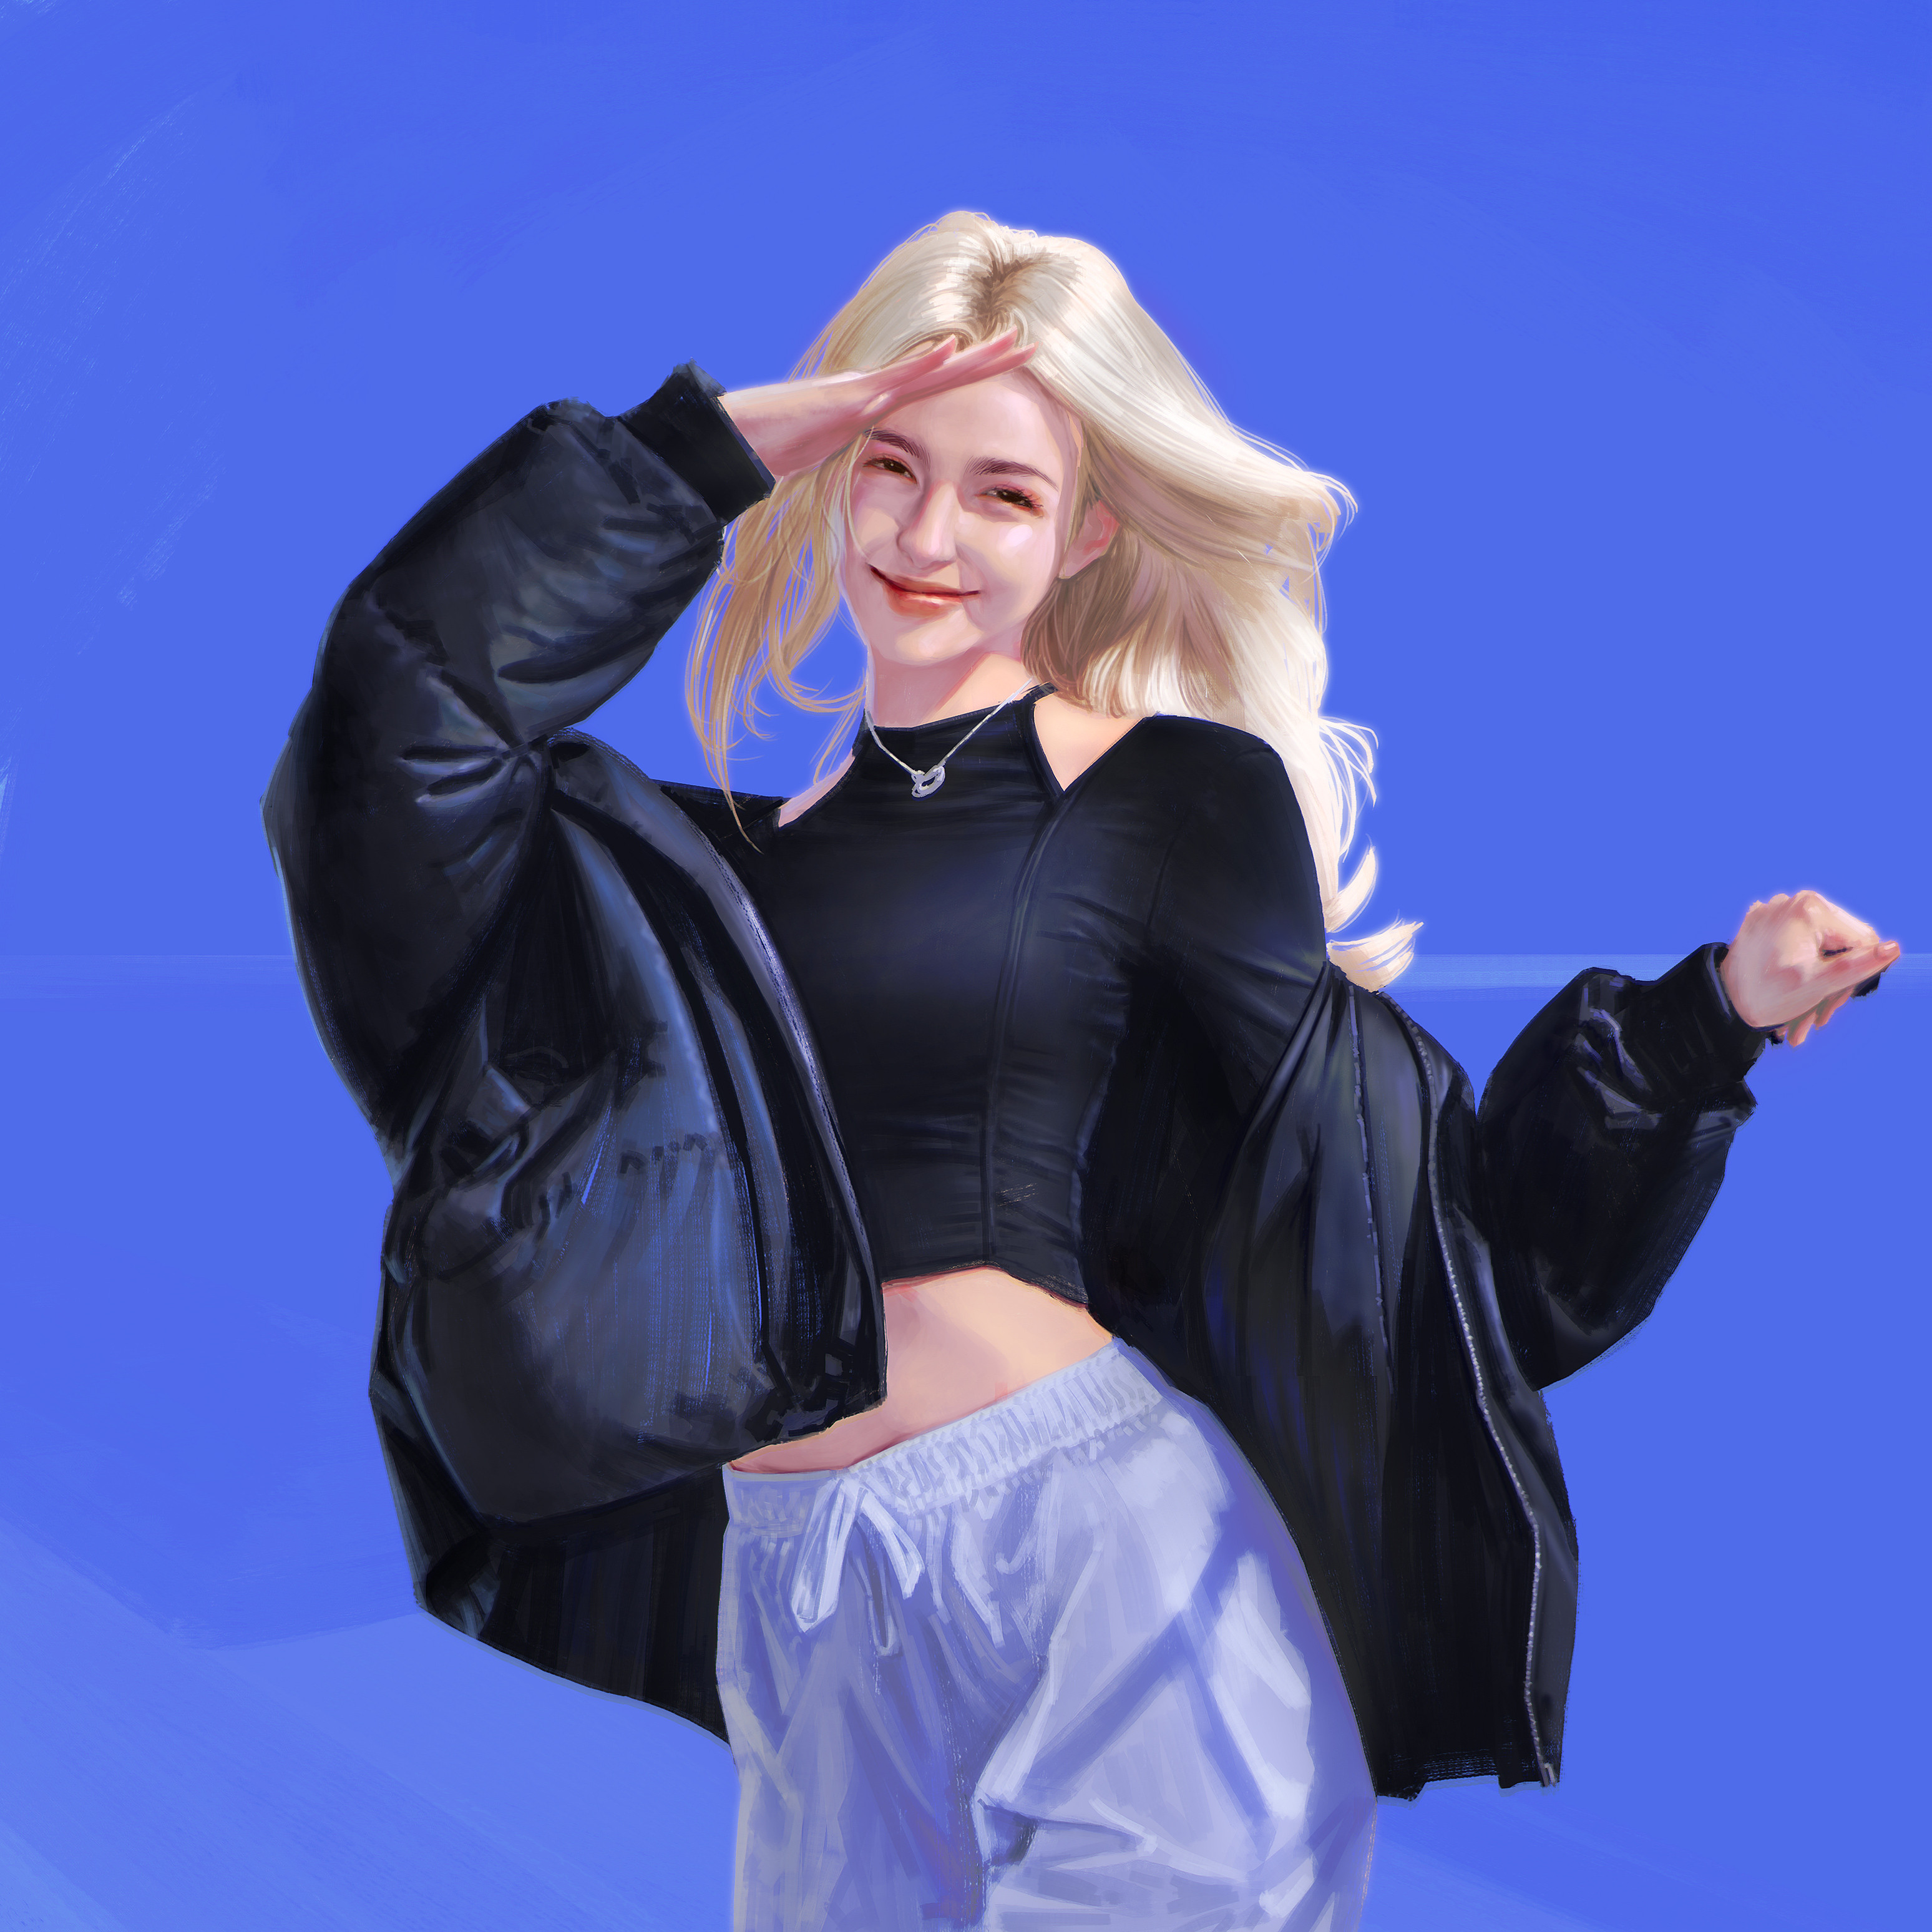 General 3096x3096 digital art artwork illustration women simple background LightBox blonde long hair smiling open jacket blue background necklace looking at viewer